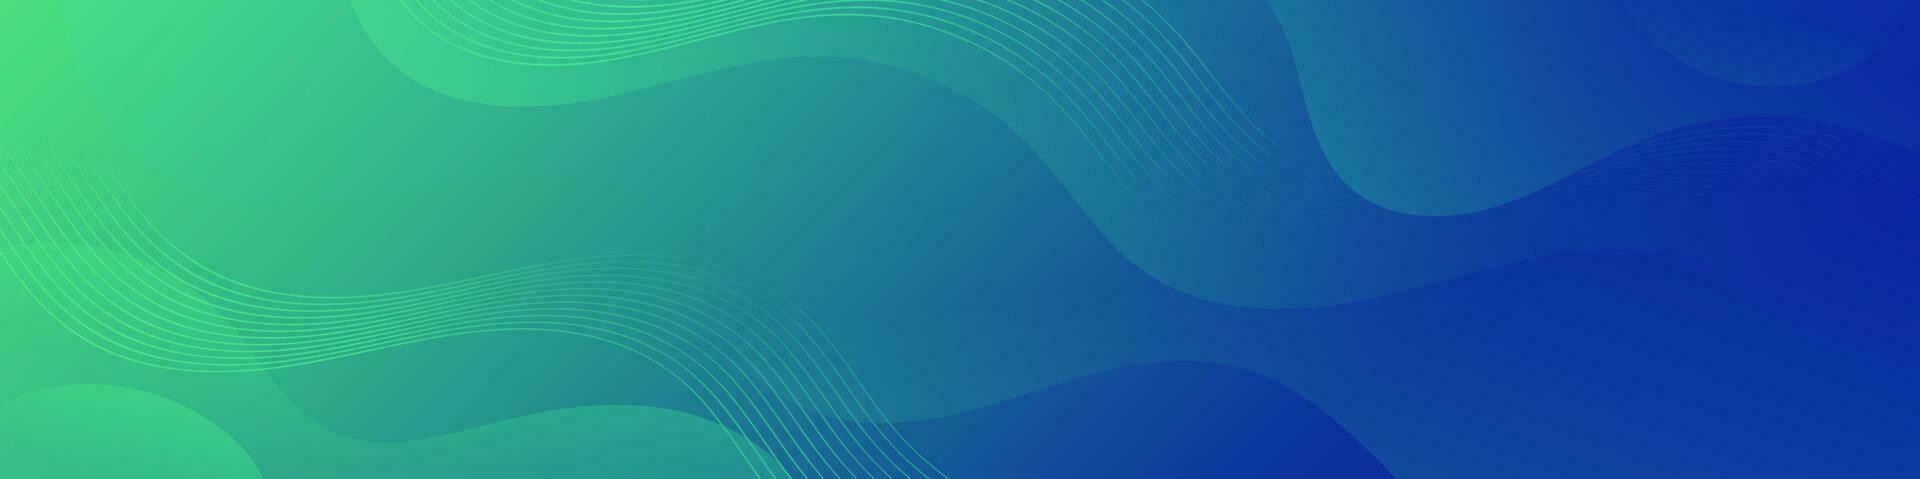 Abstract Gradient green blue liquid Wave Background vector